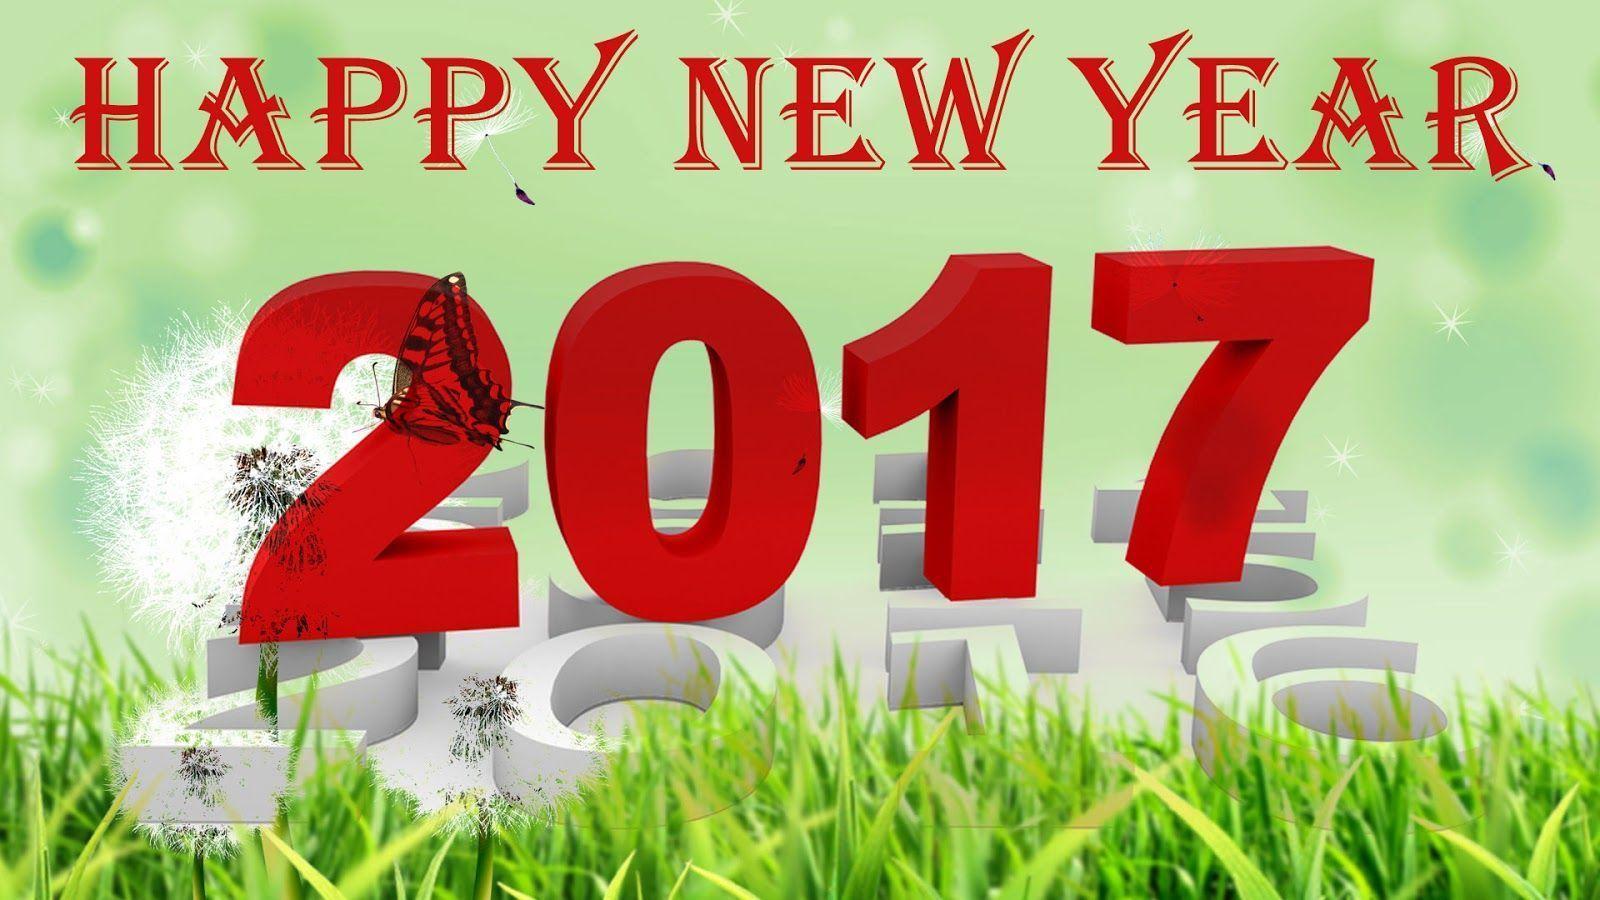 HD Wallpaper Free Download: Happy New Year 2017 HD